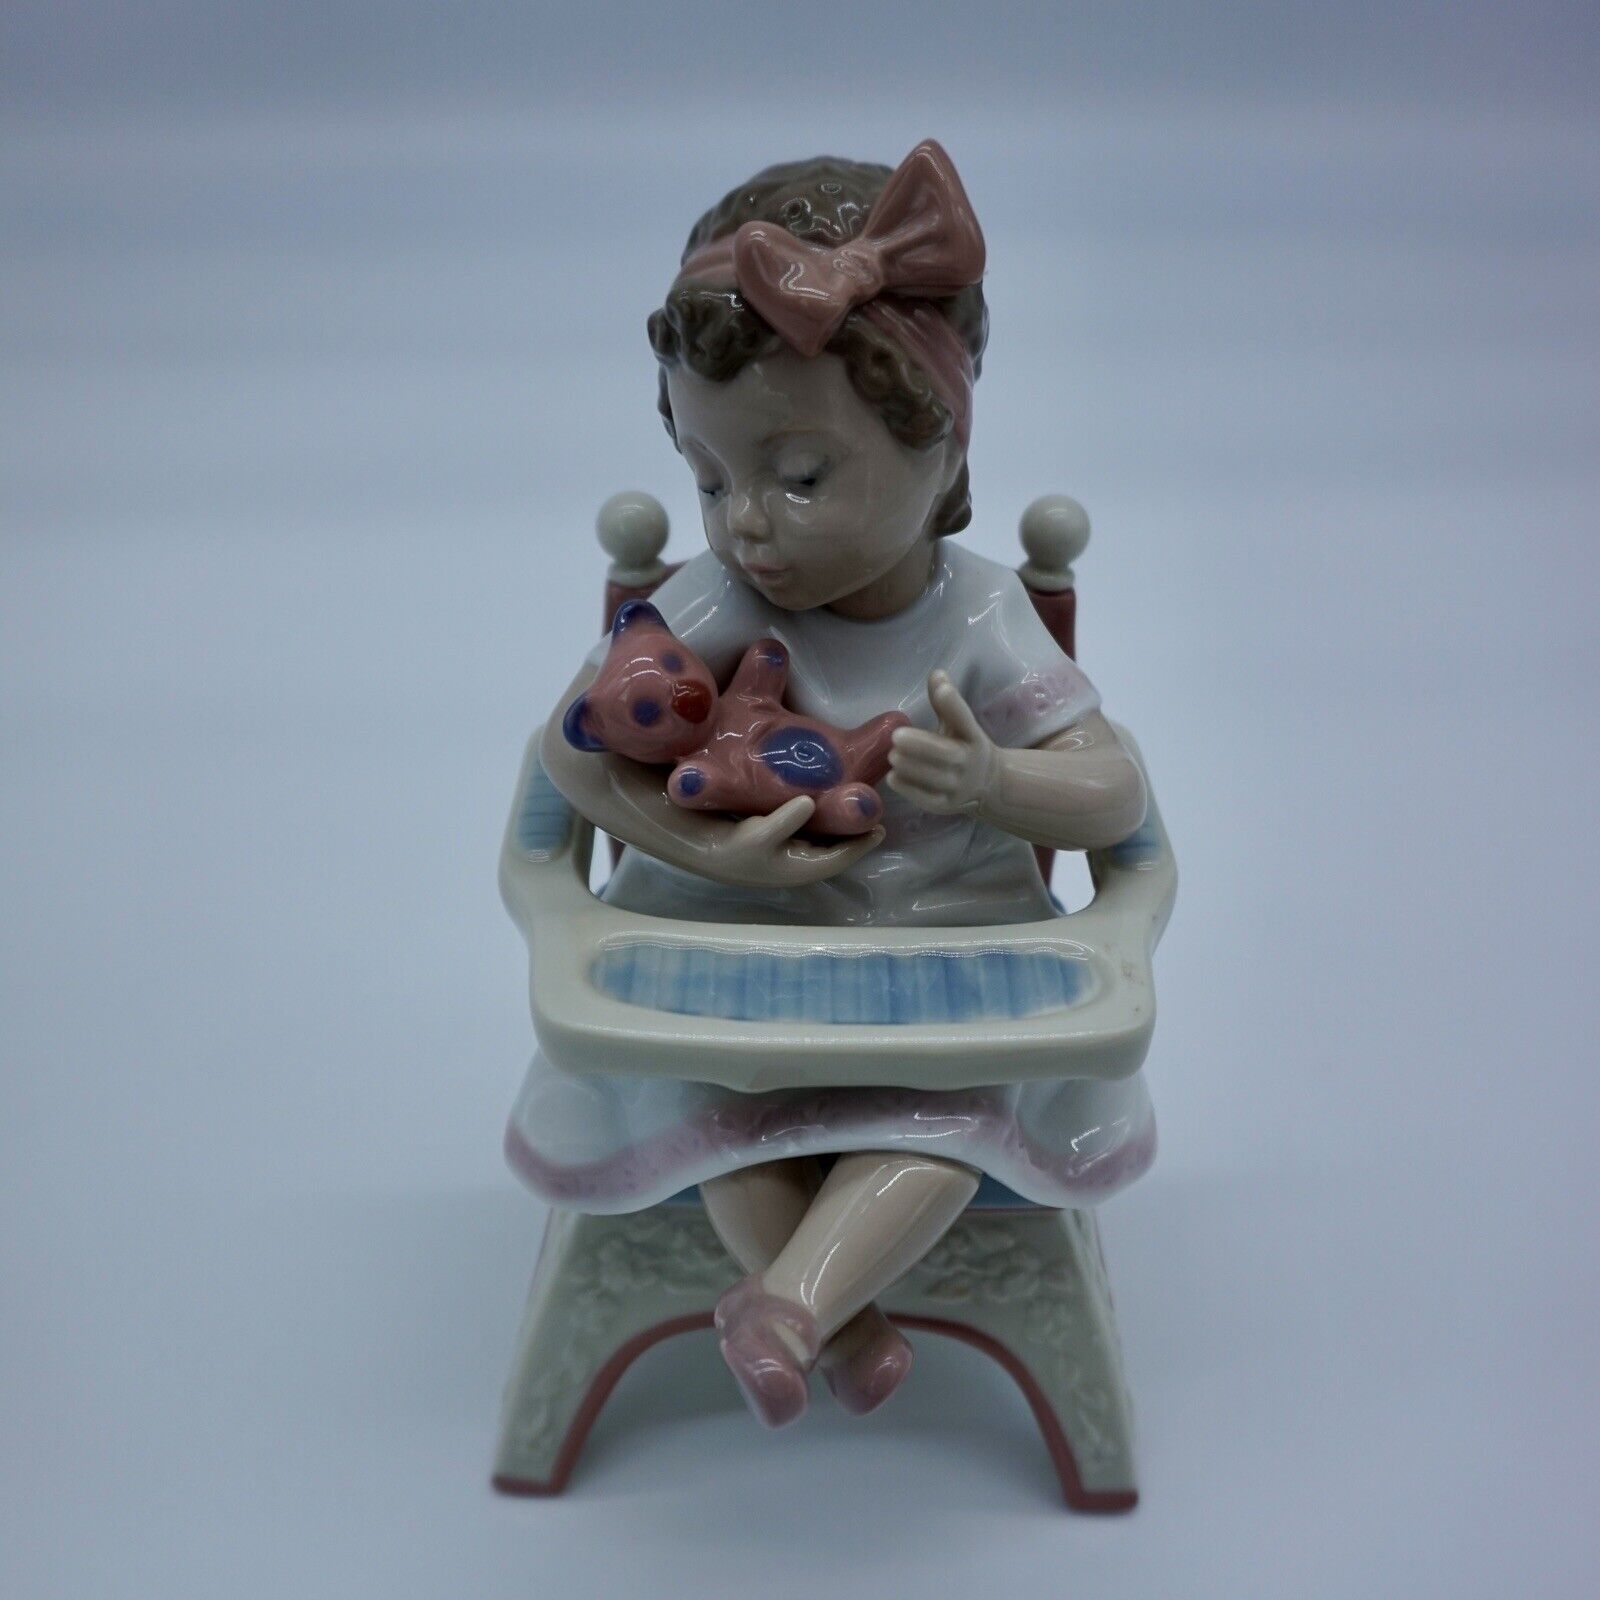 VTG Lladro Figurine #6299 Porcelain Spain Teddy Bear Girl Highchair Original